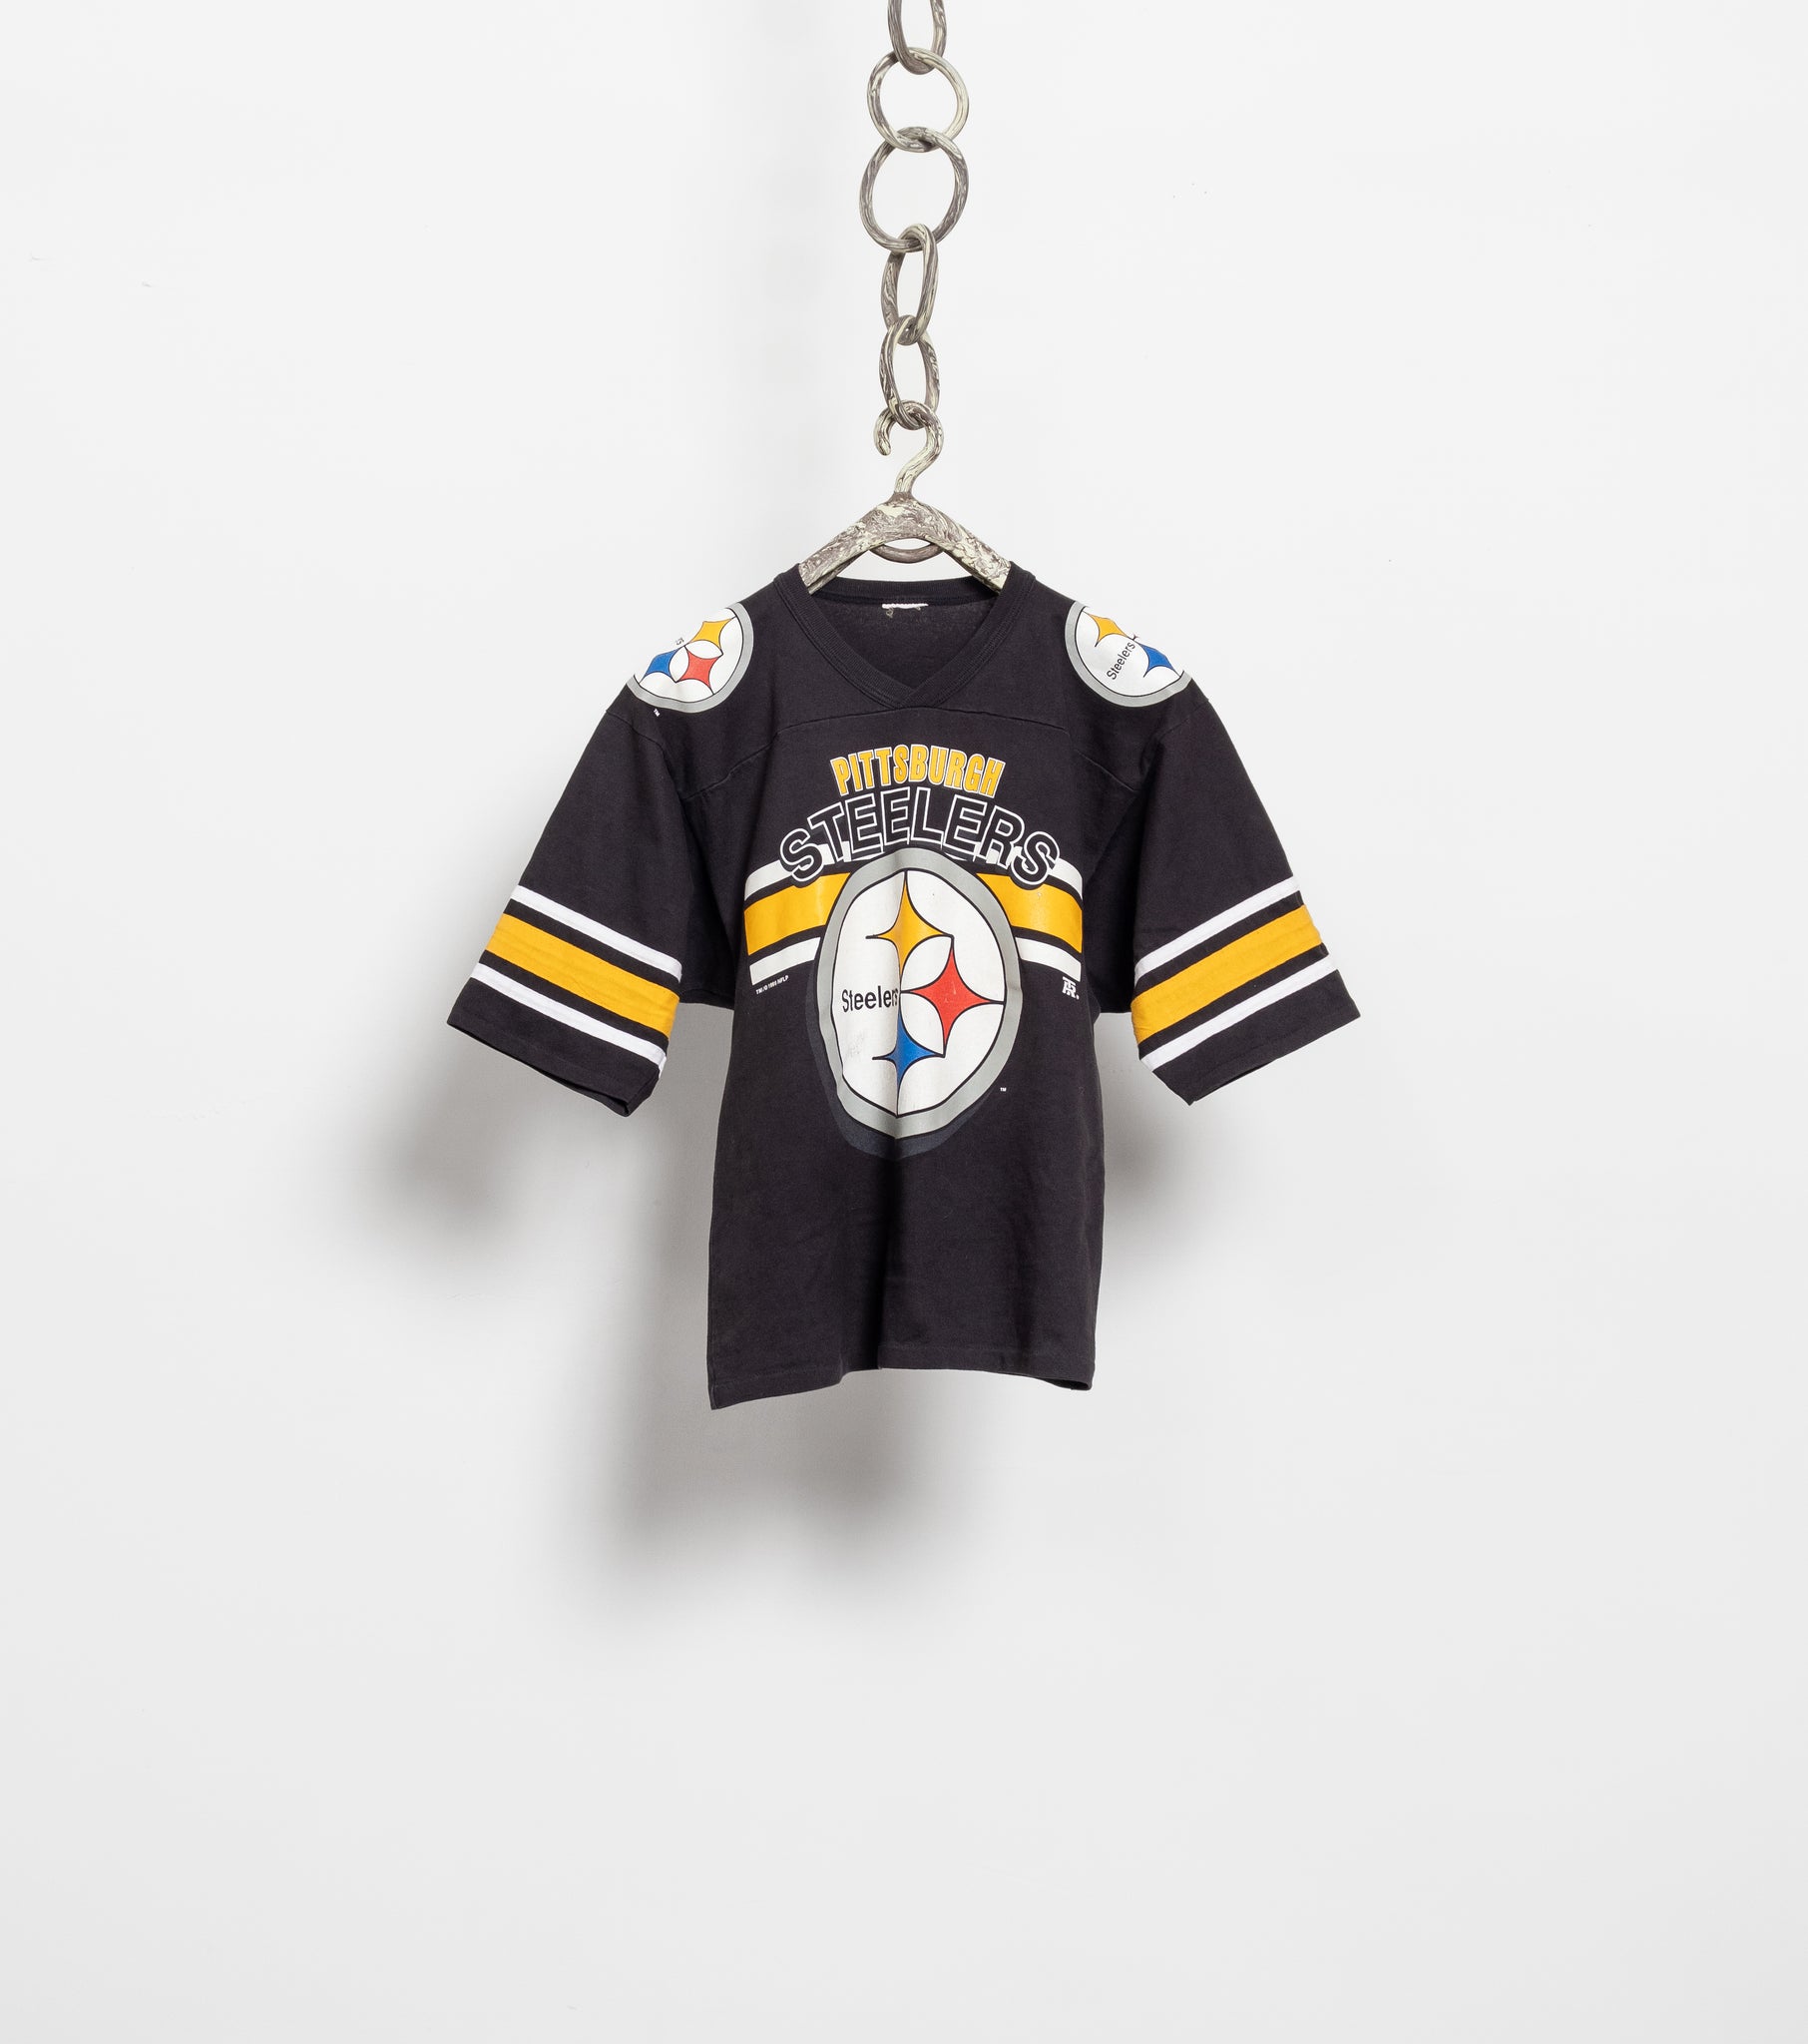 Steelers 1995